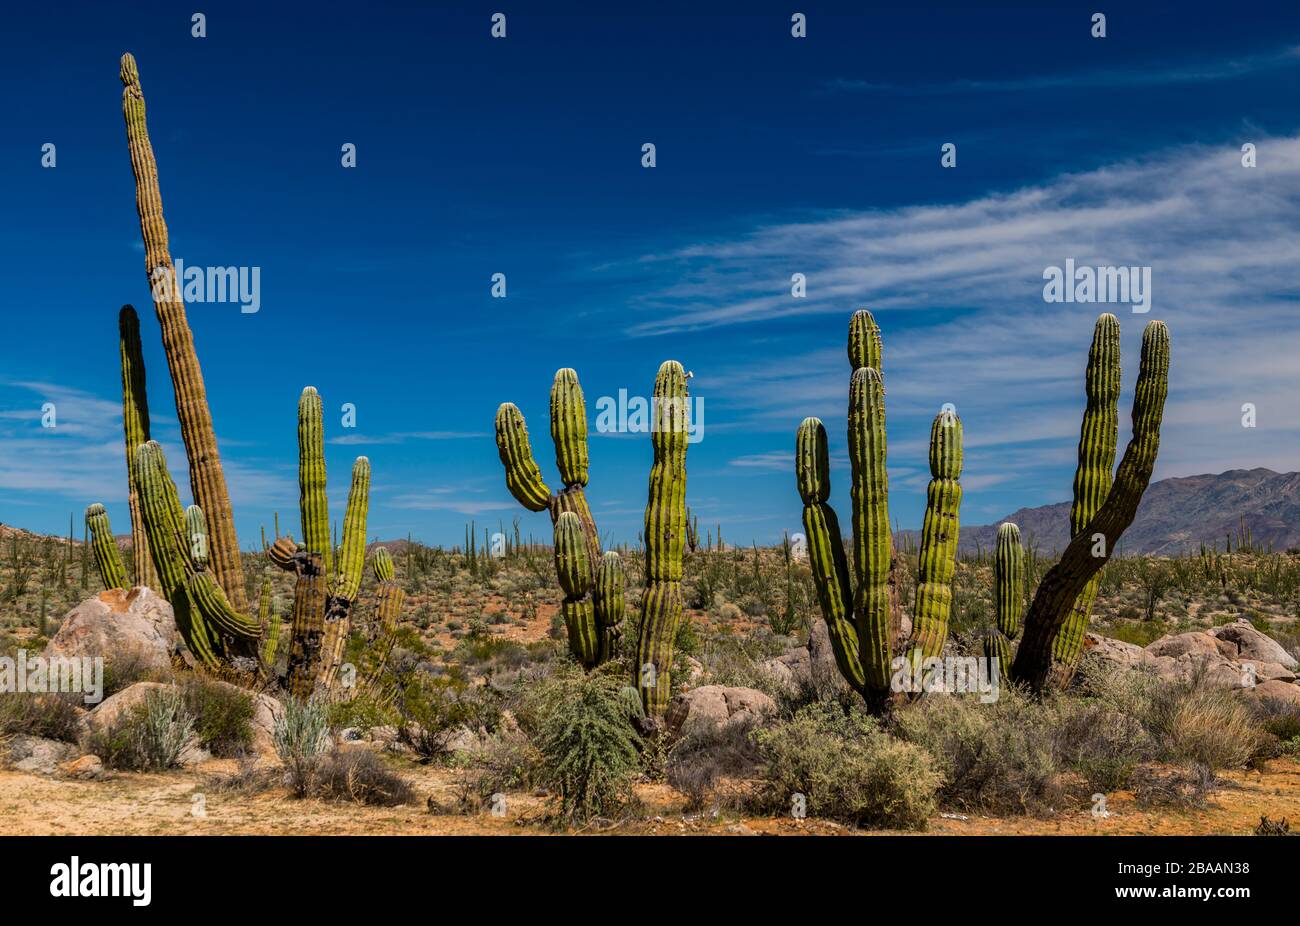 Cardon cactus (Pachycereus pringlei) in Baja California Desert, Baja California Sur, Mexico Stock Photo